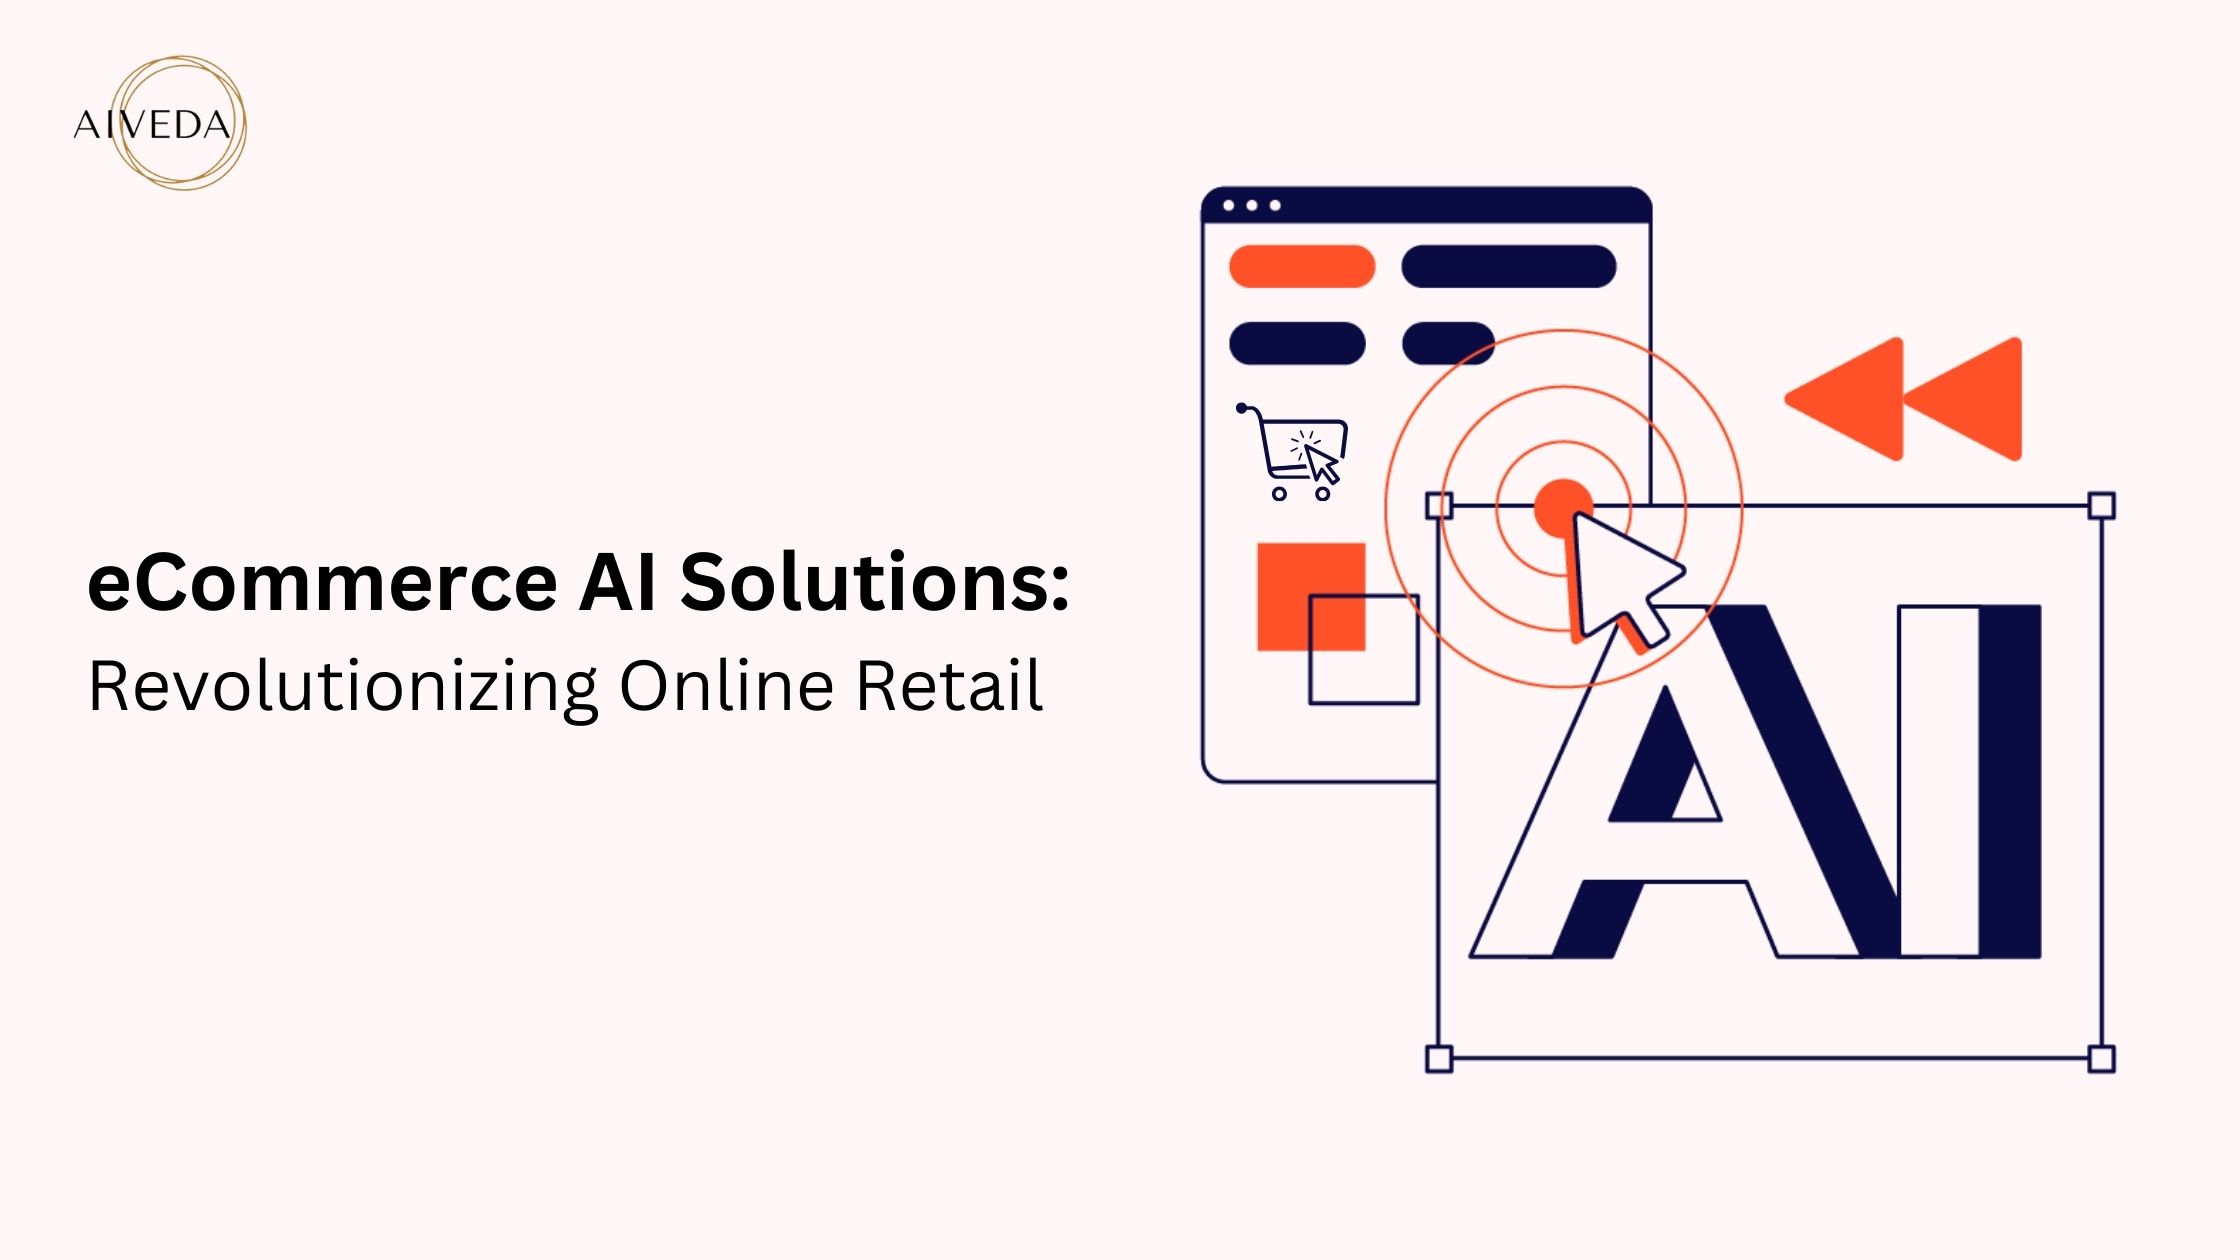 eCommerce AI Solutions: Revolutionizing Online Retail